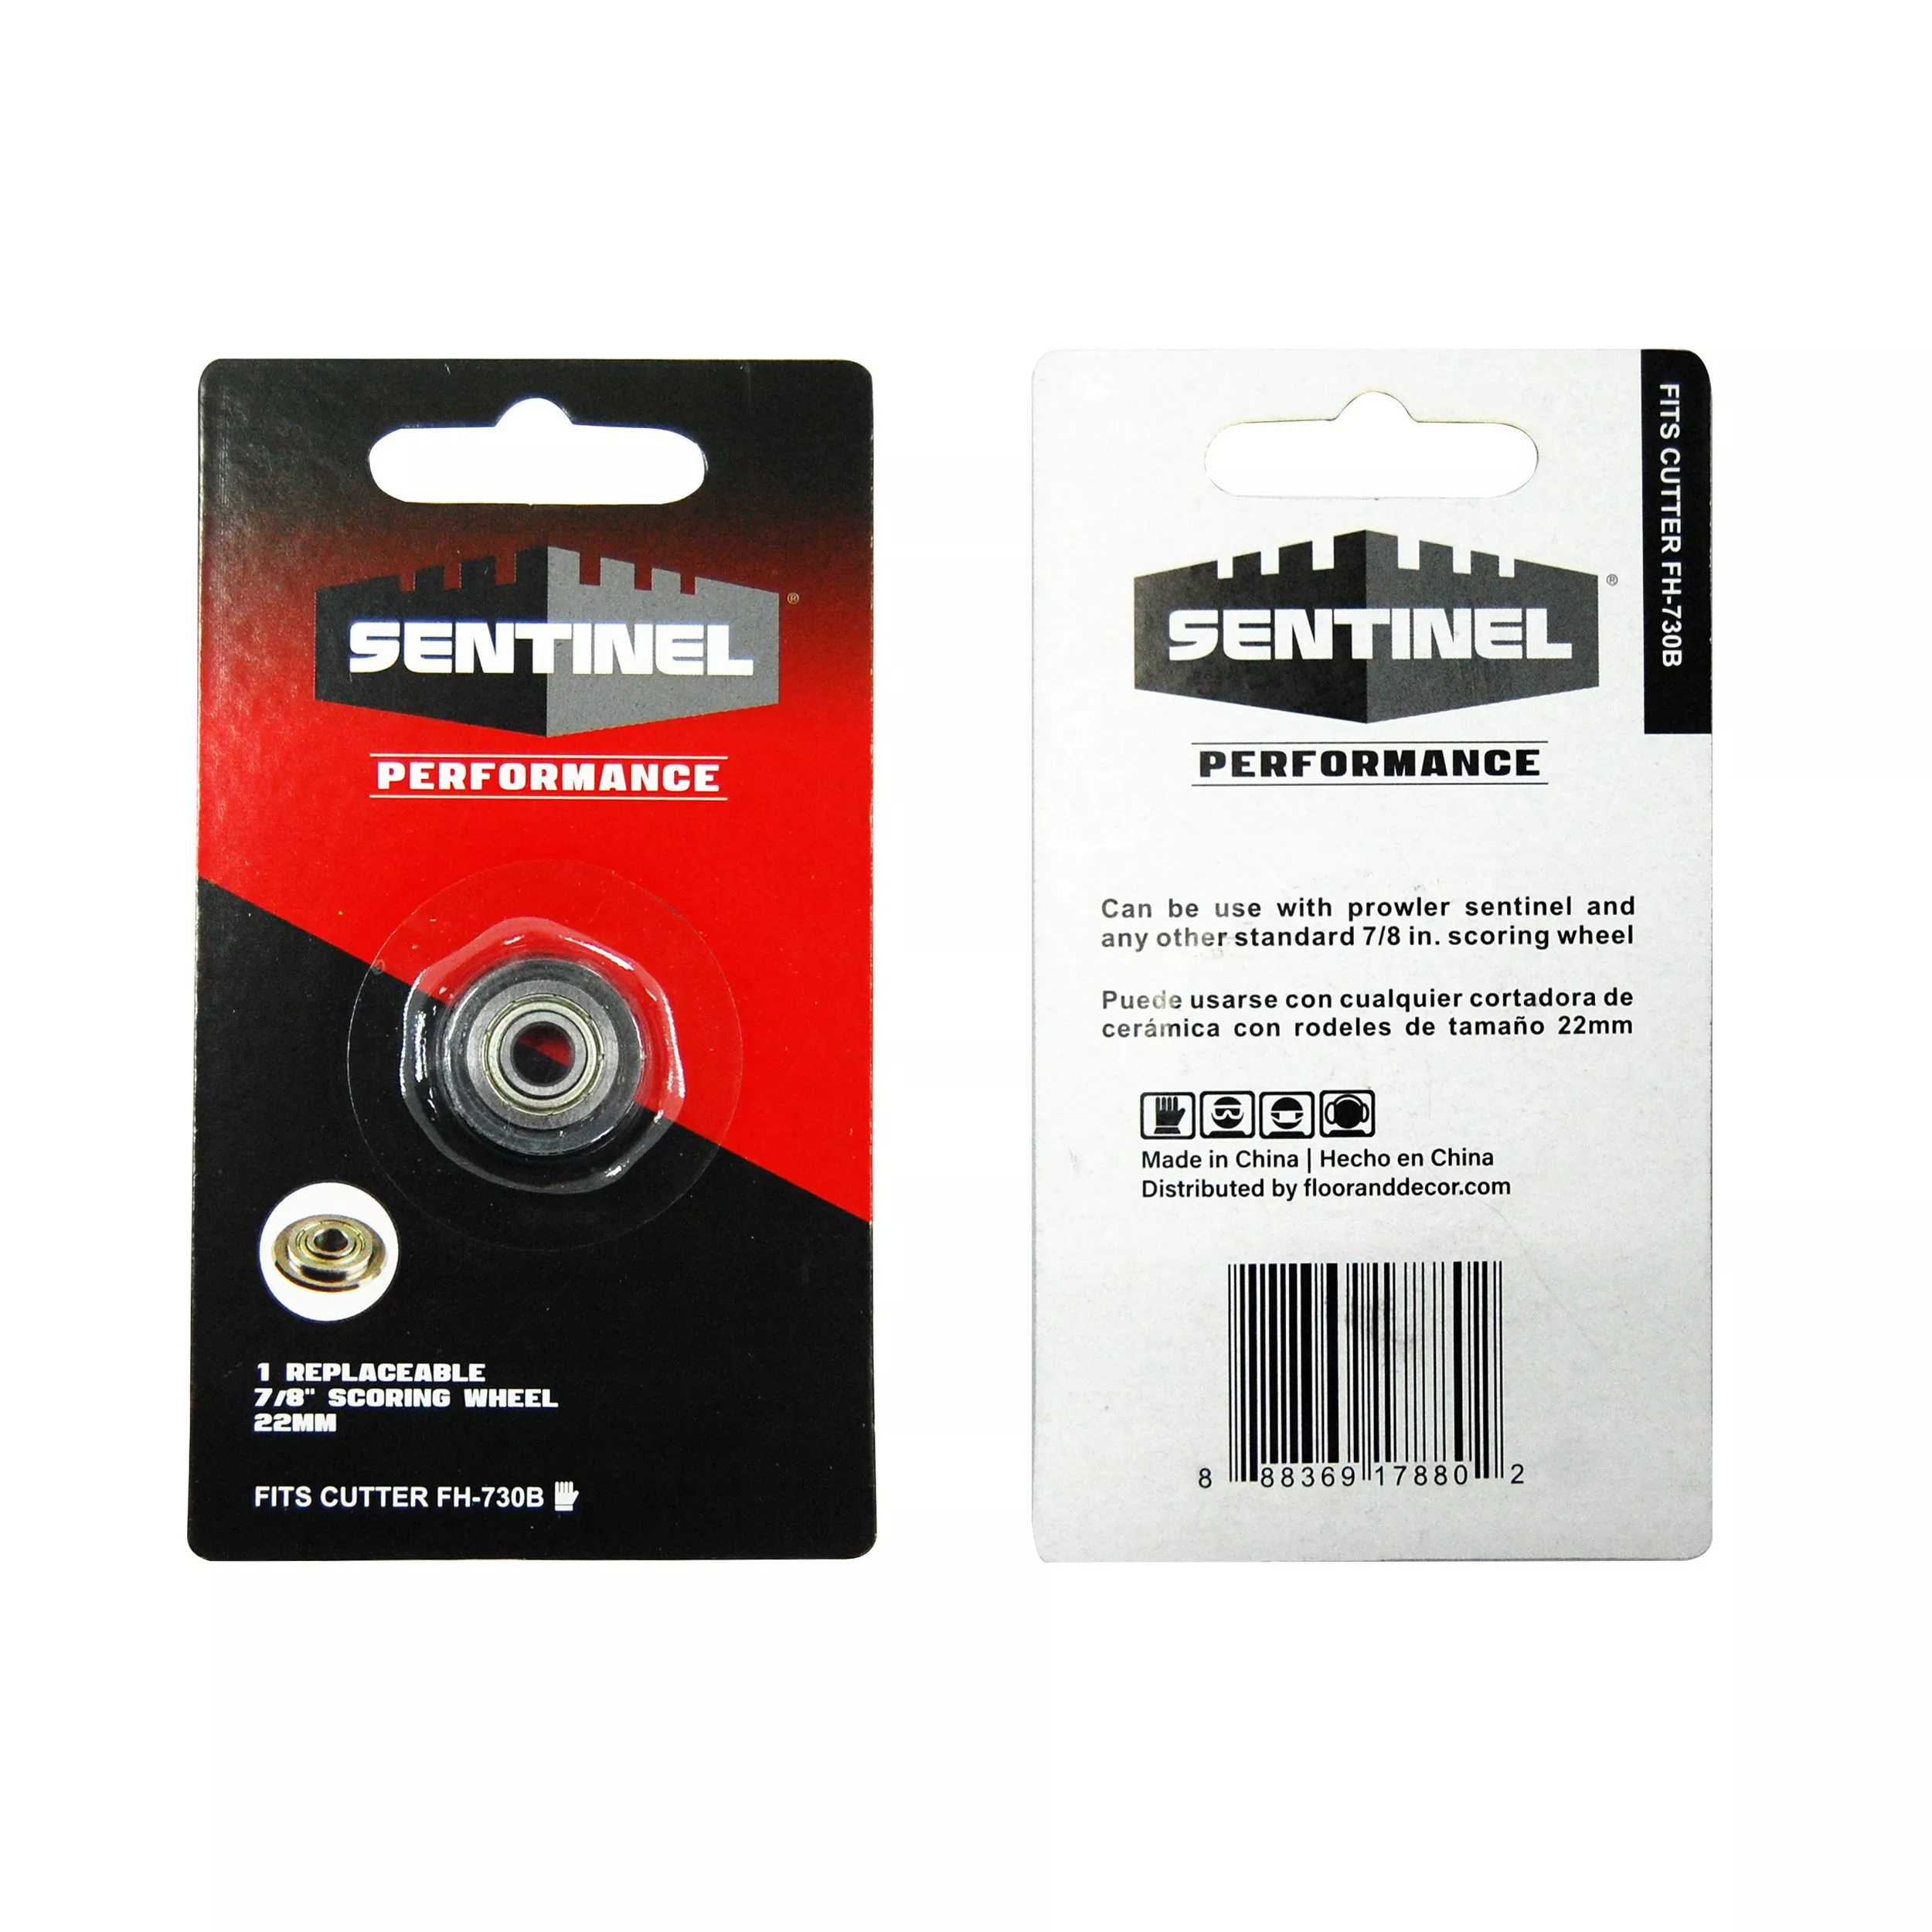 Sentinel 22mm Scoring Wheel